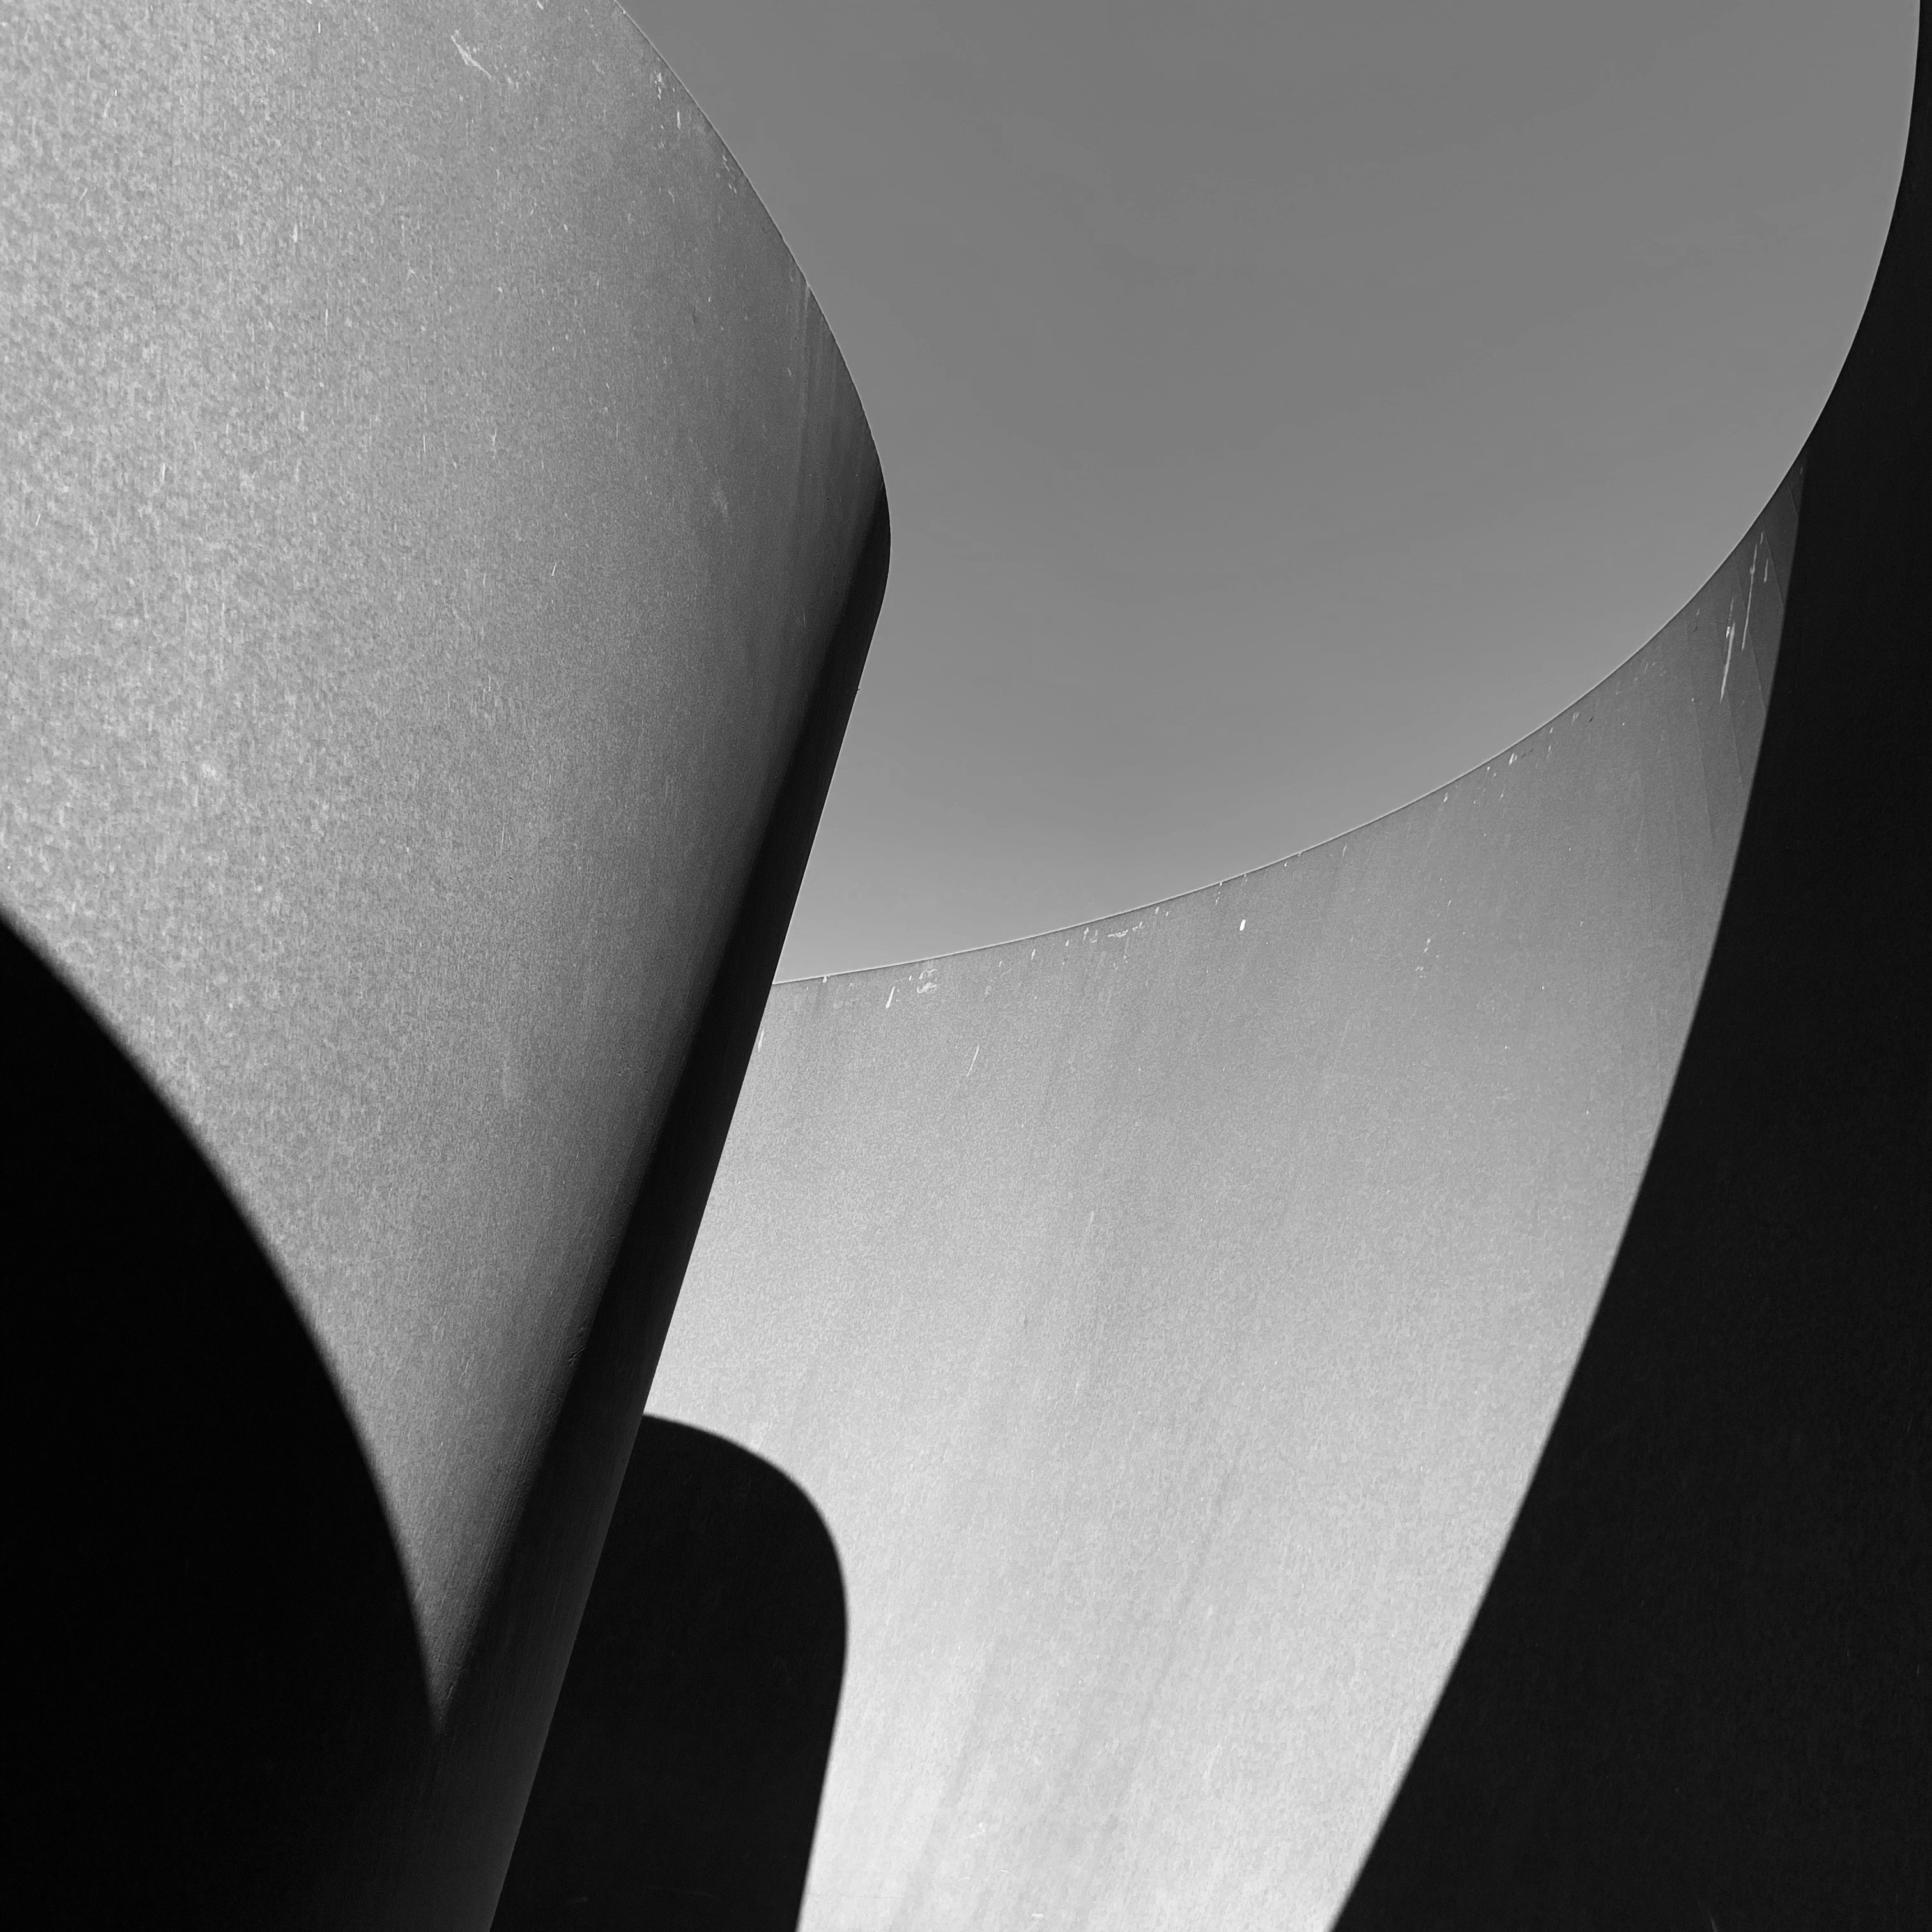 Richard Serra’s Sequence, Stanford University, Palo Alto, CA